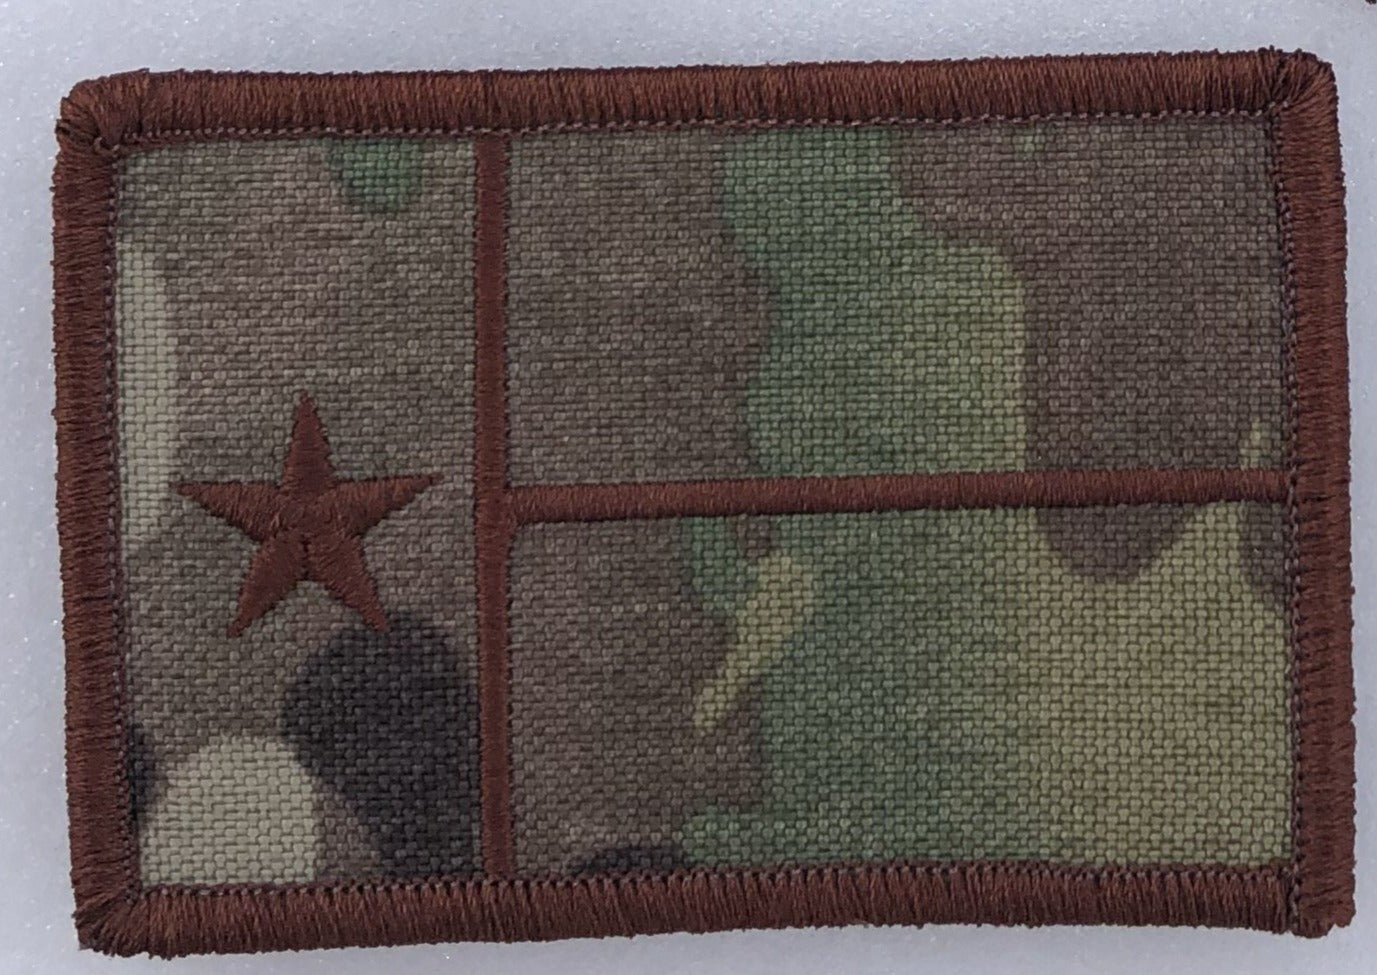 Texas Tactical Patch - 2" x 3" - MULTICAM Camo